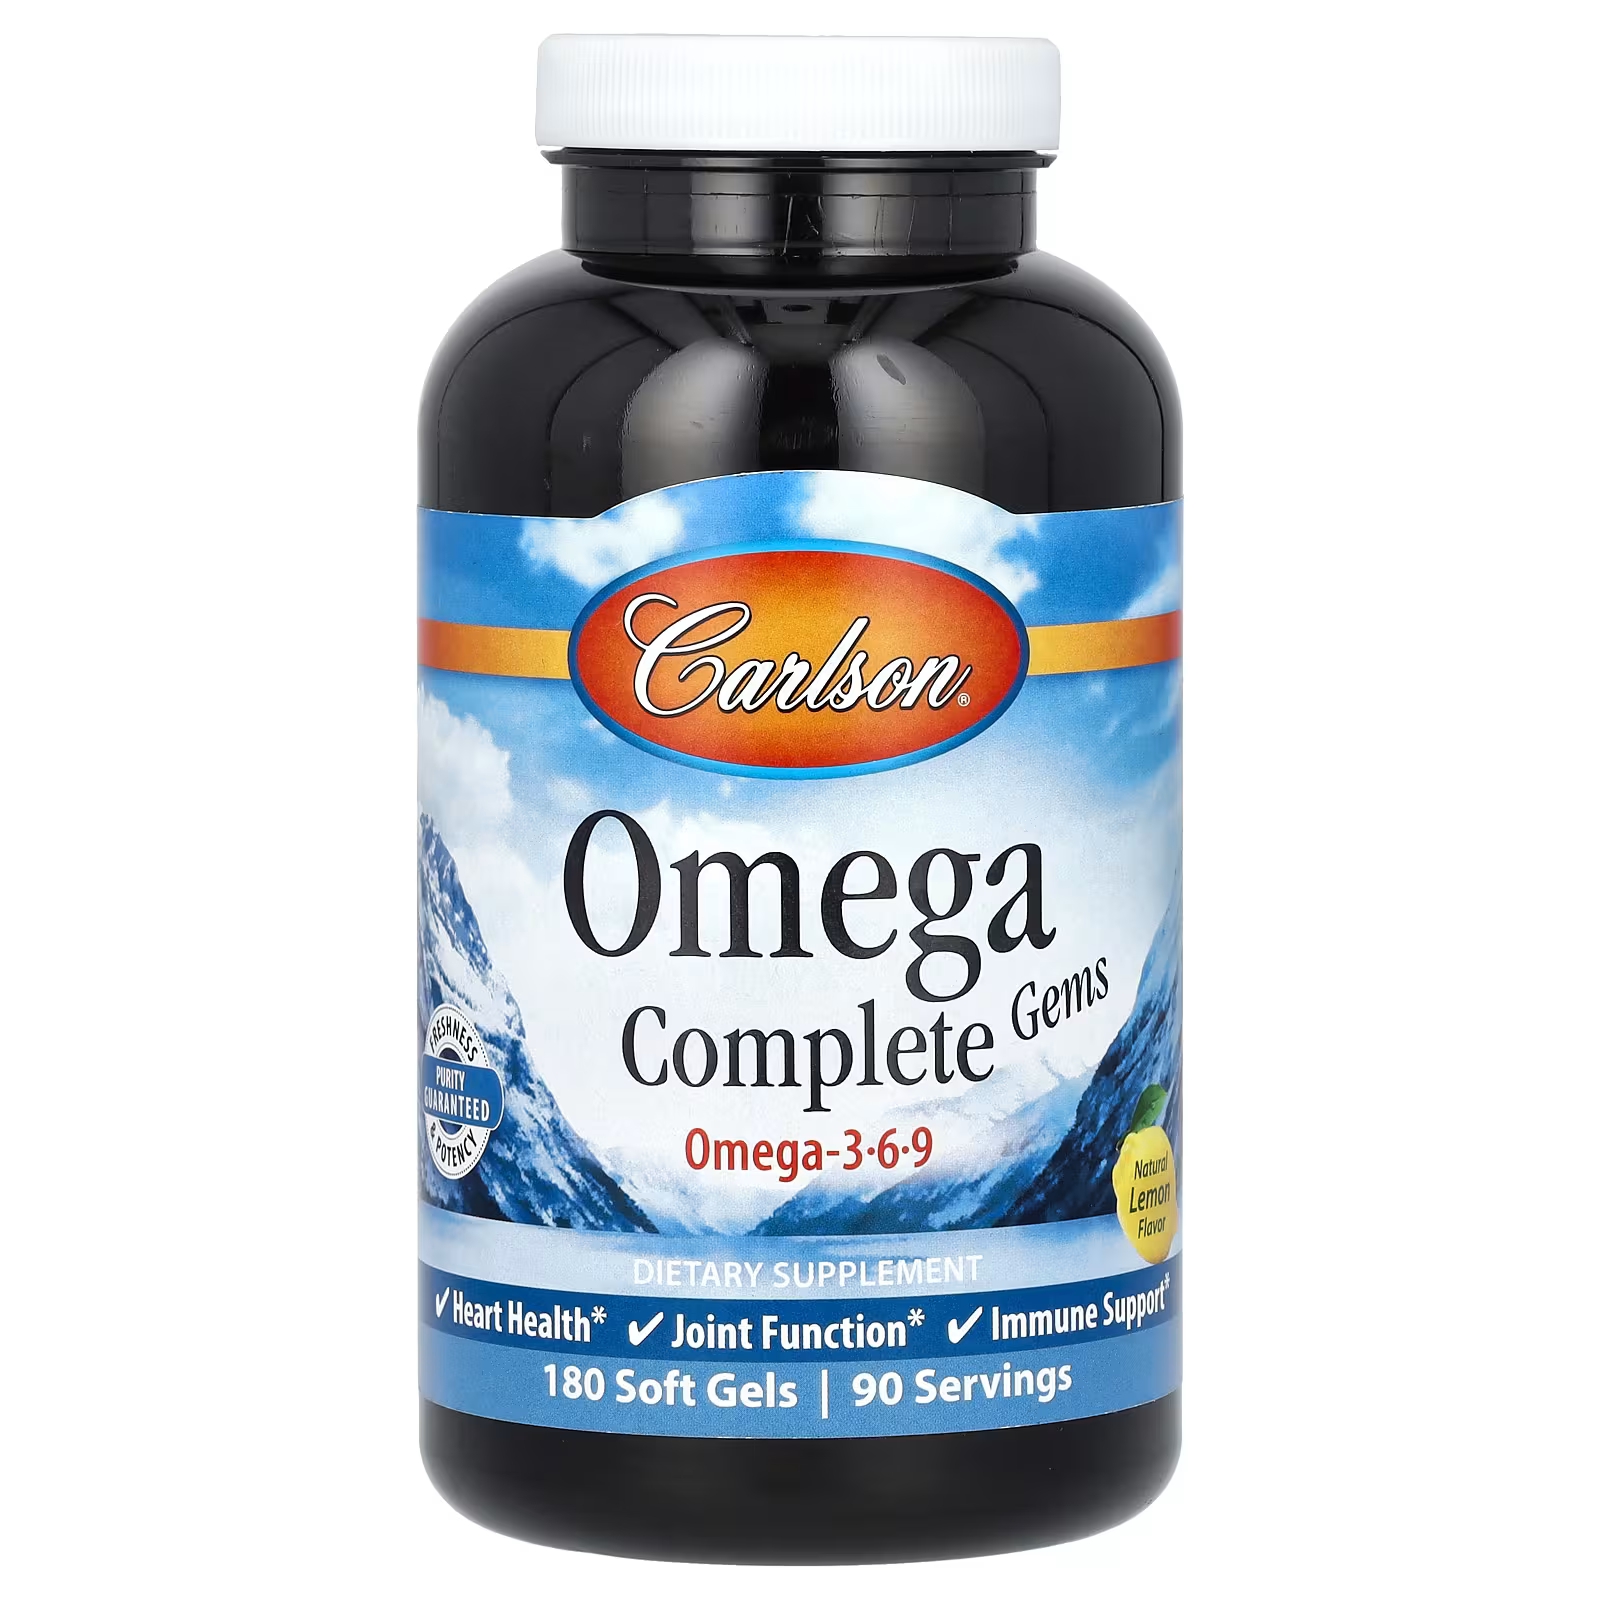 Carlson Omega Complete Gems Omega-3-6-9 Натуральный лимон 180 мягких таблеток carlson aces omega 180 мягких таблеток